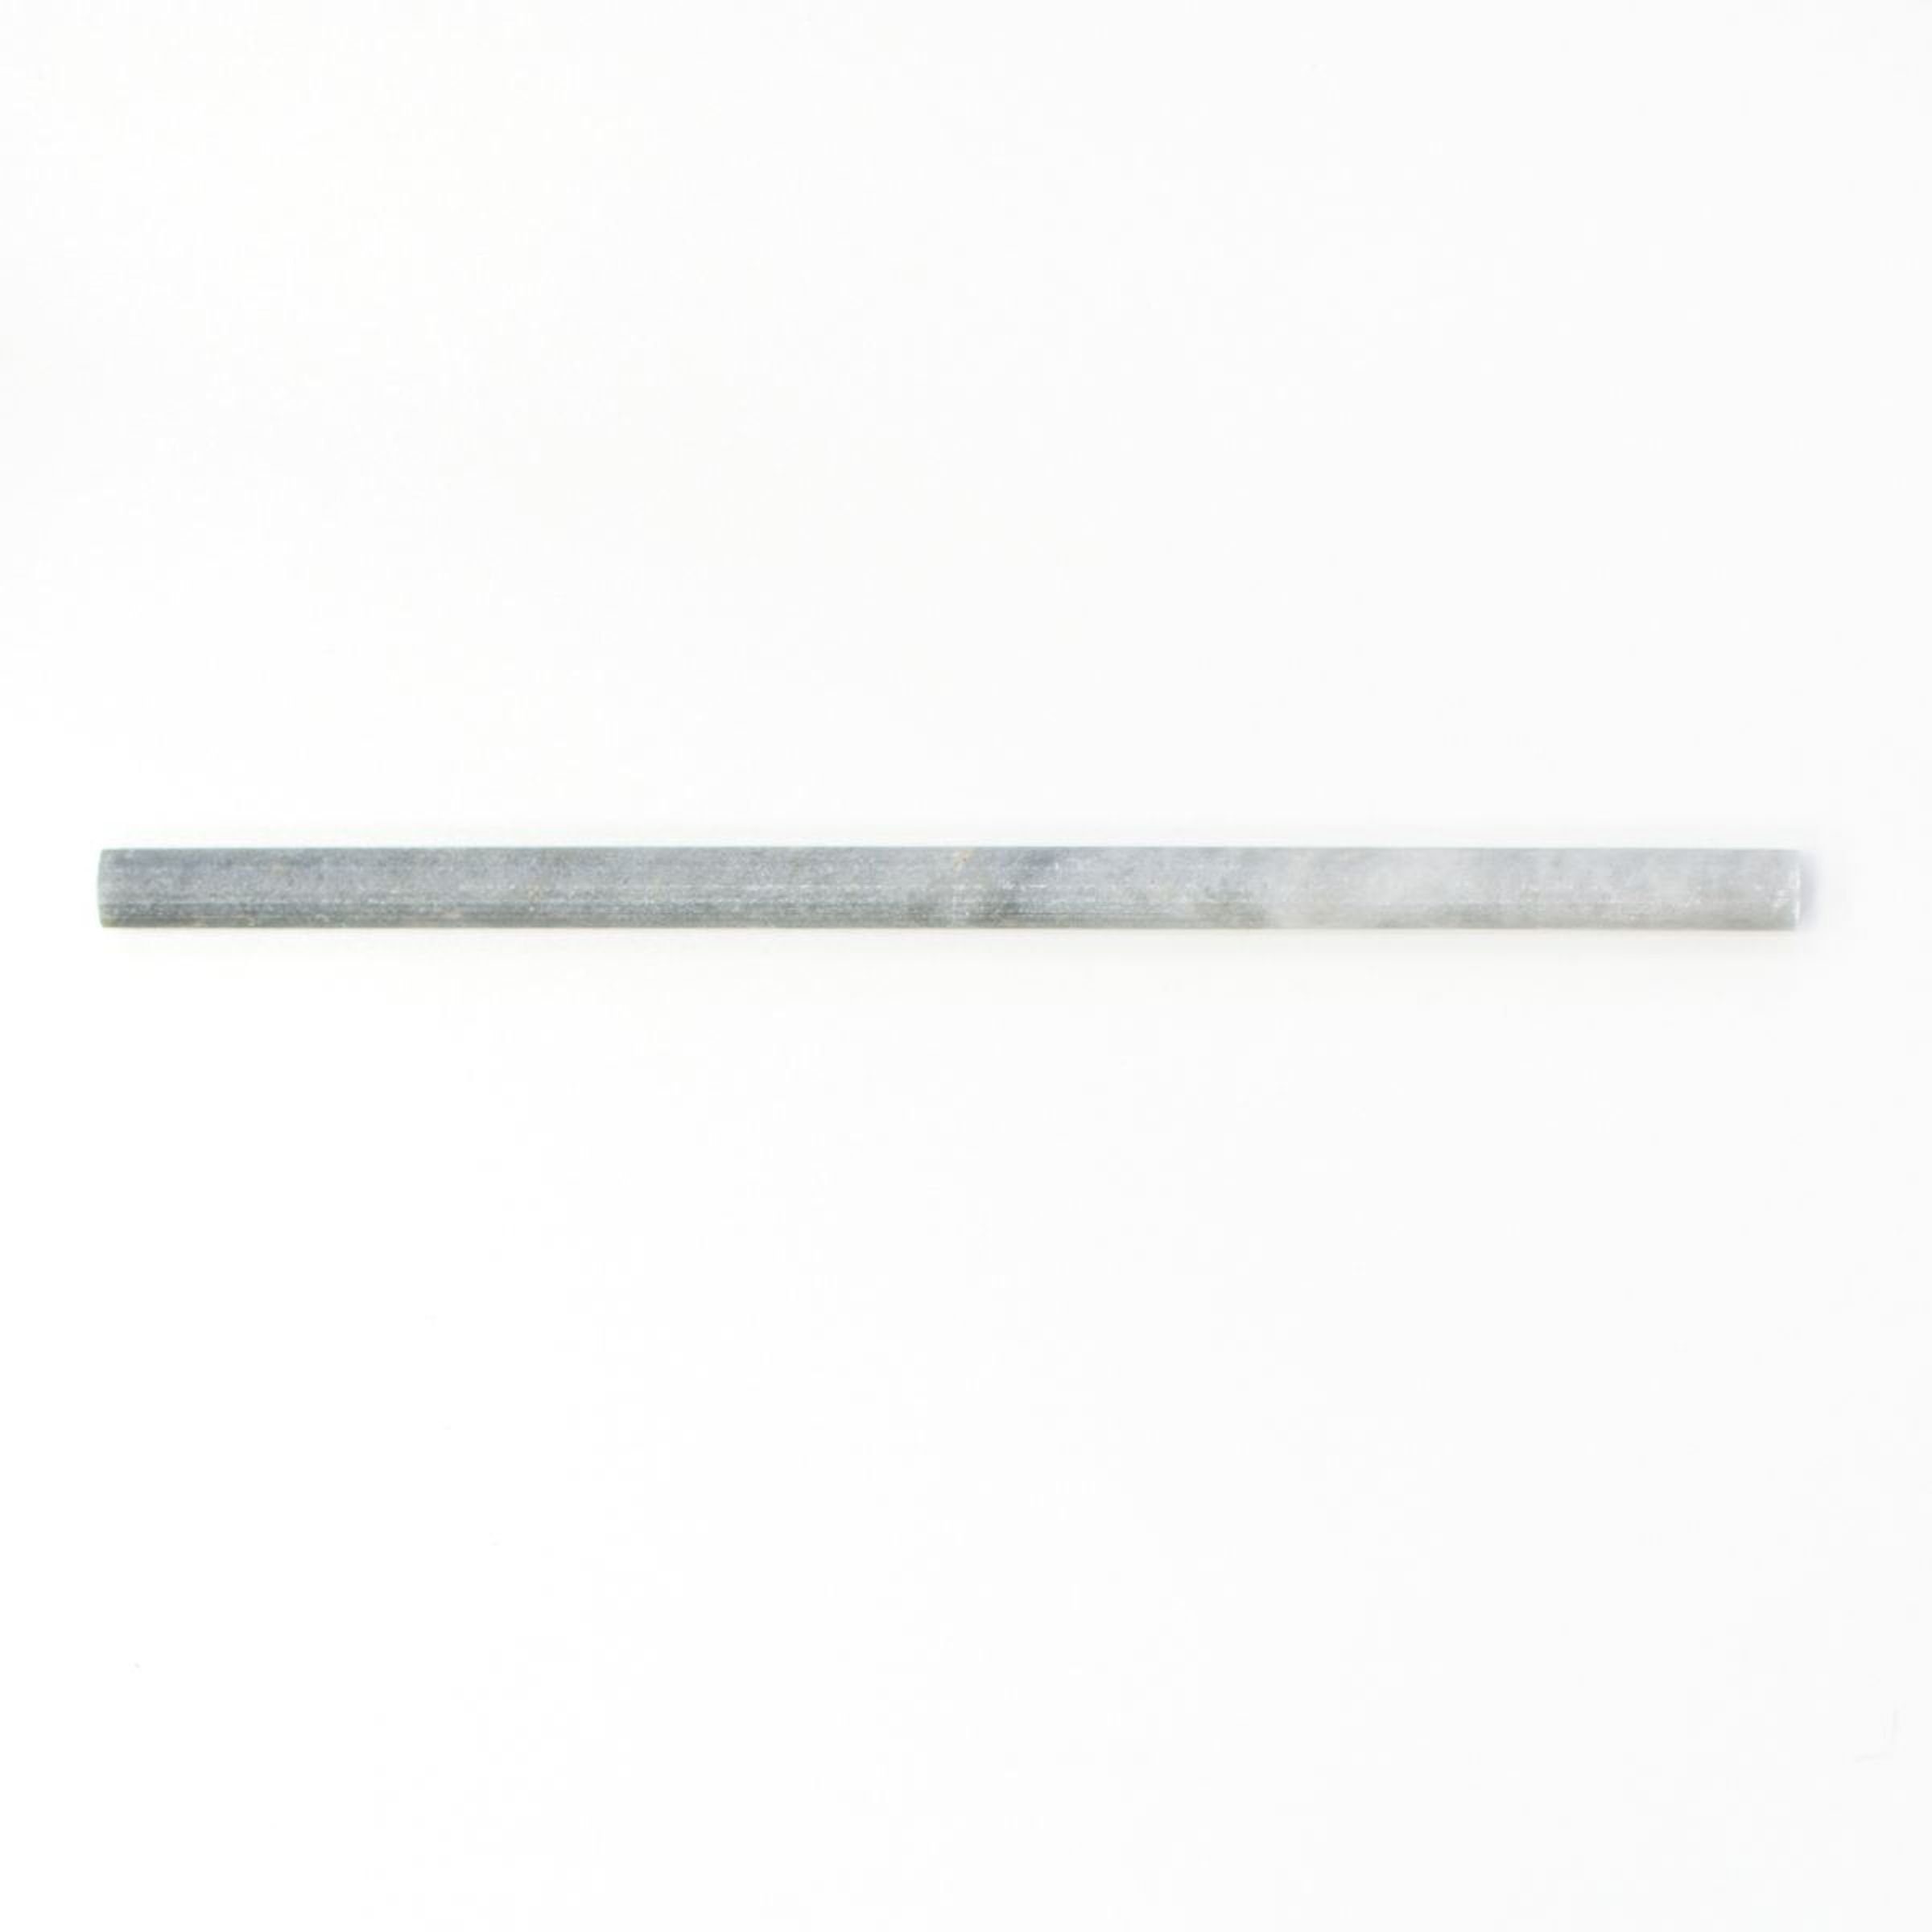 Fliesen-Bordüre Profil hellgrau Borde / Mosani matt Marmormosaik 10 Stück